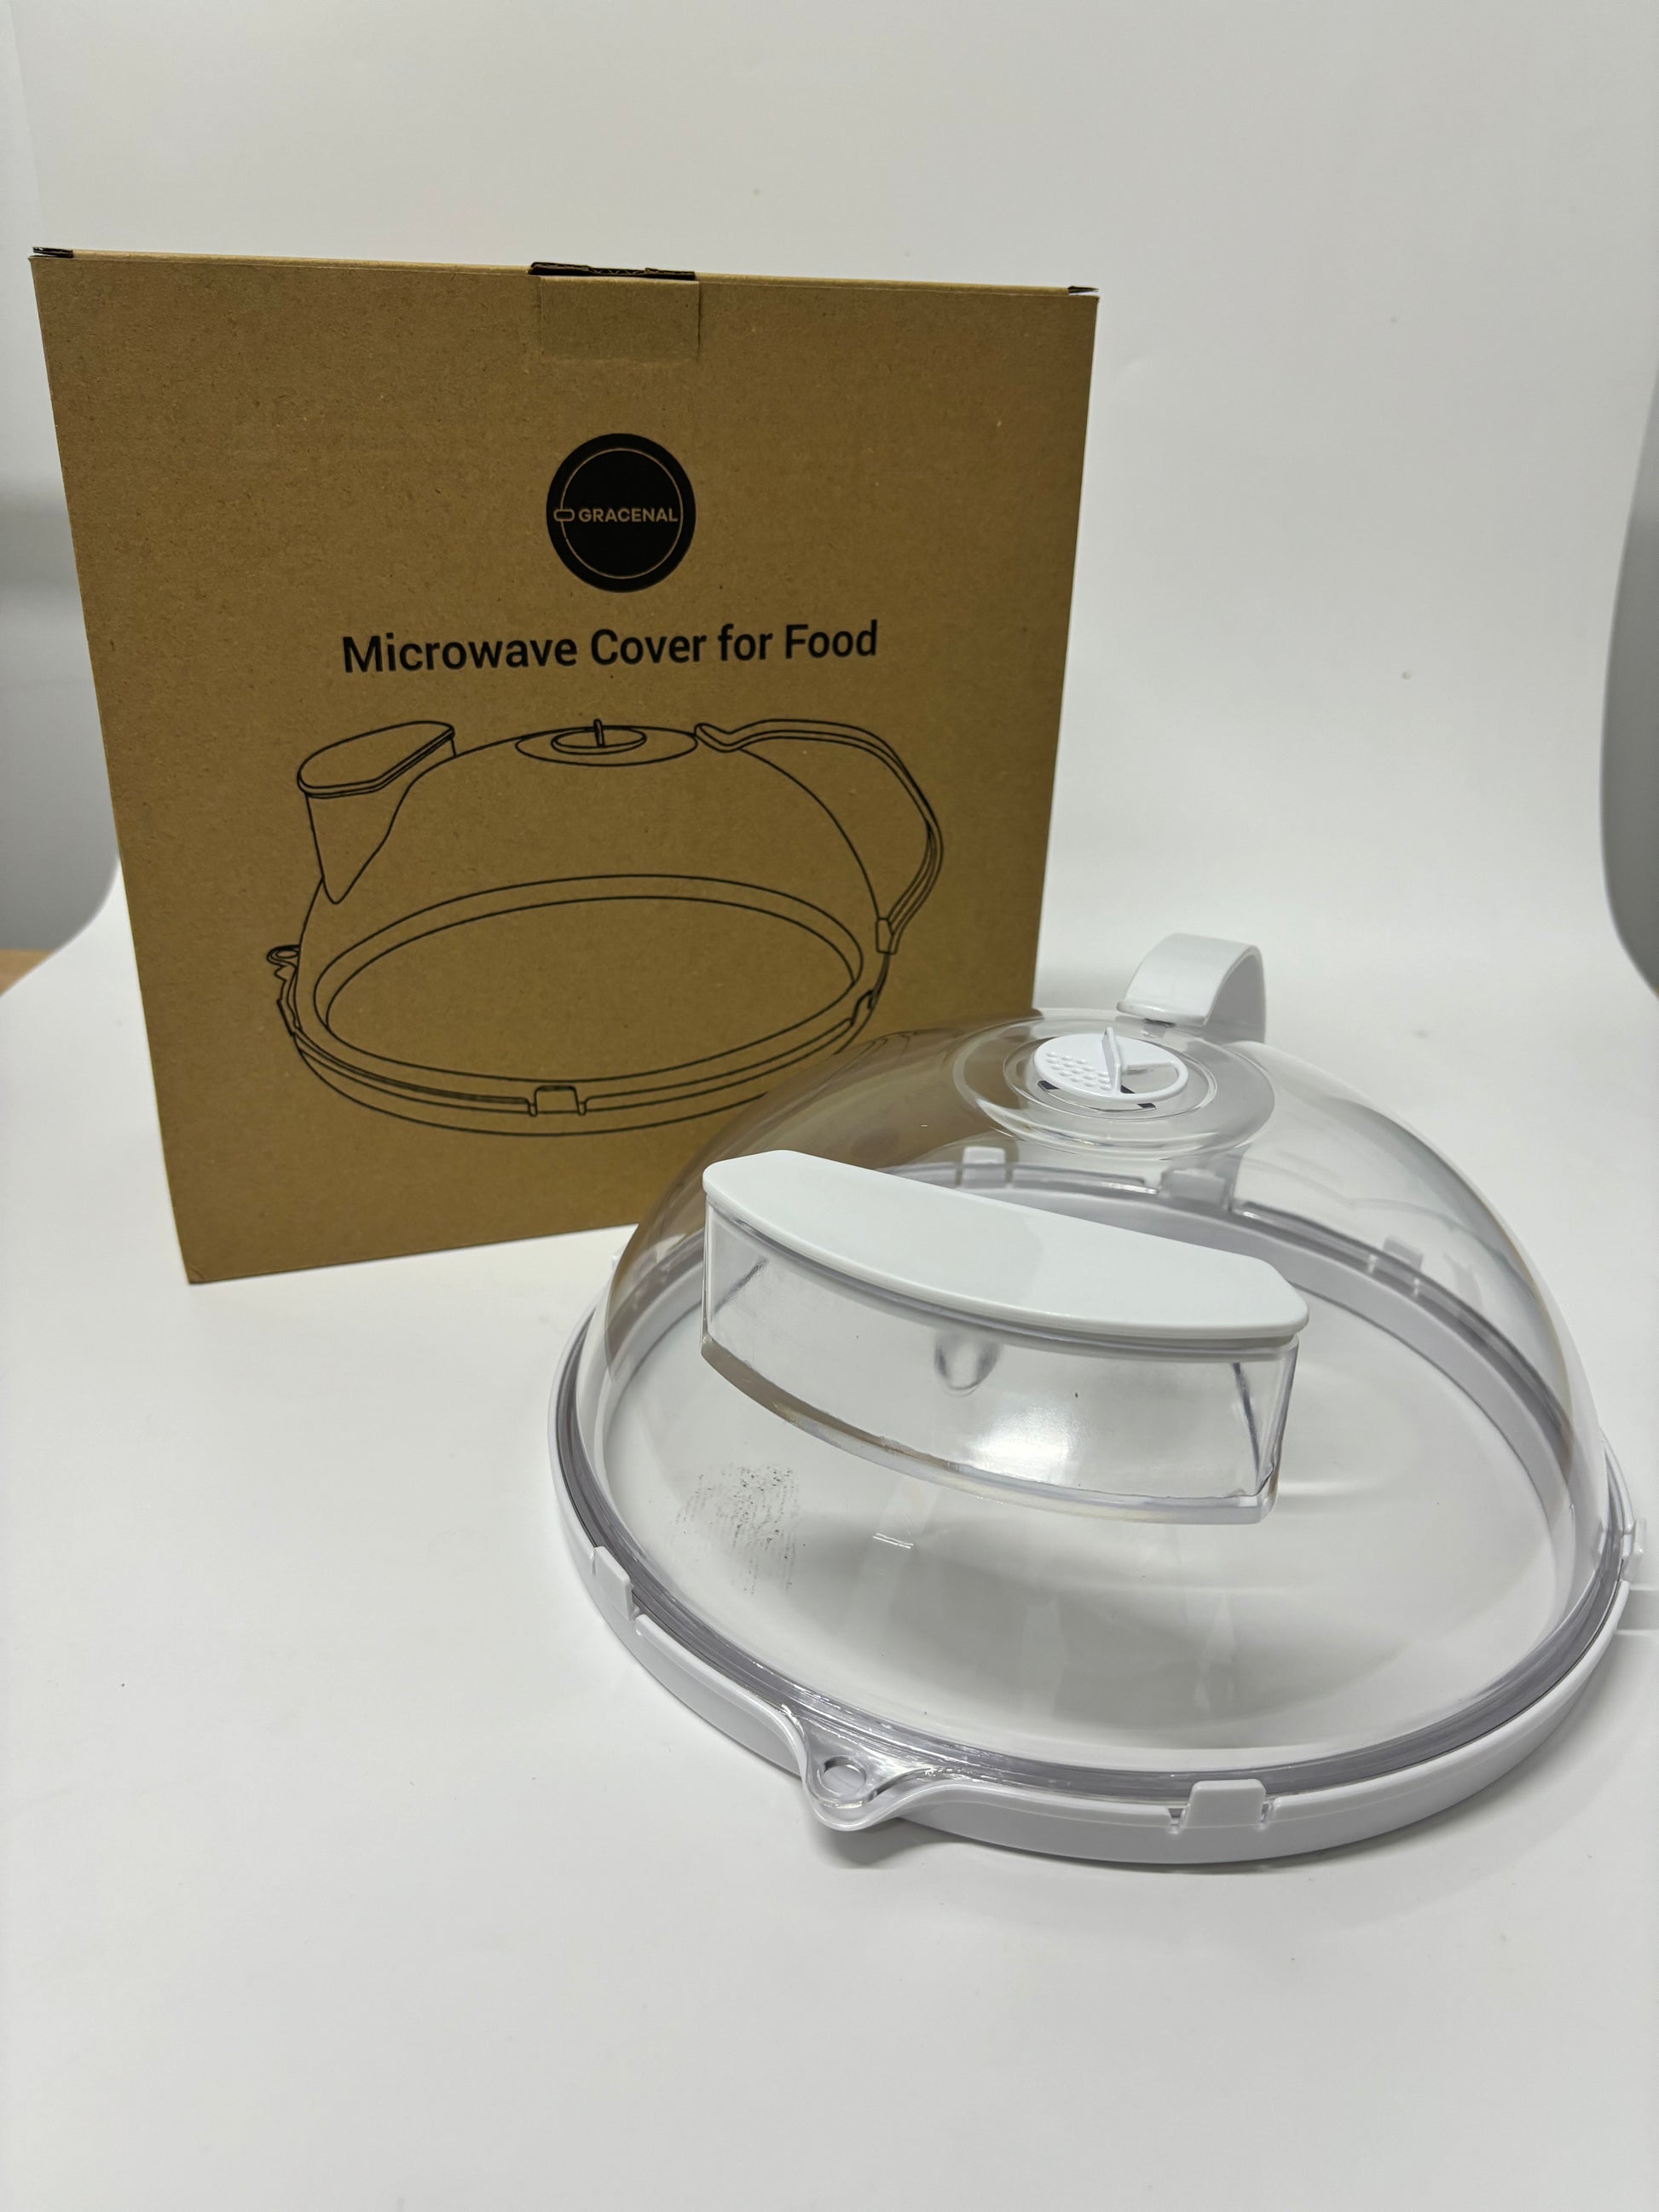 Gracenal Microwave Cover for Food – Combler